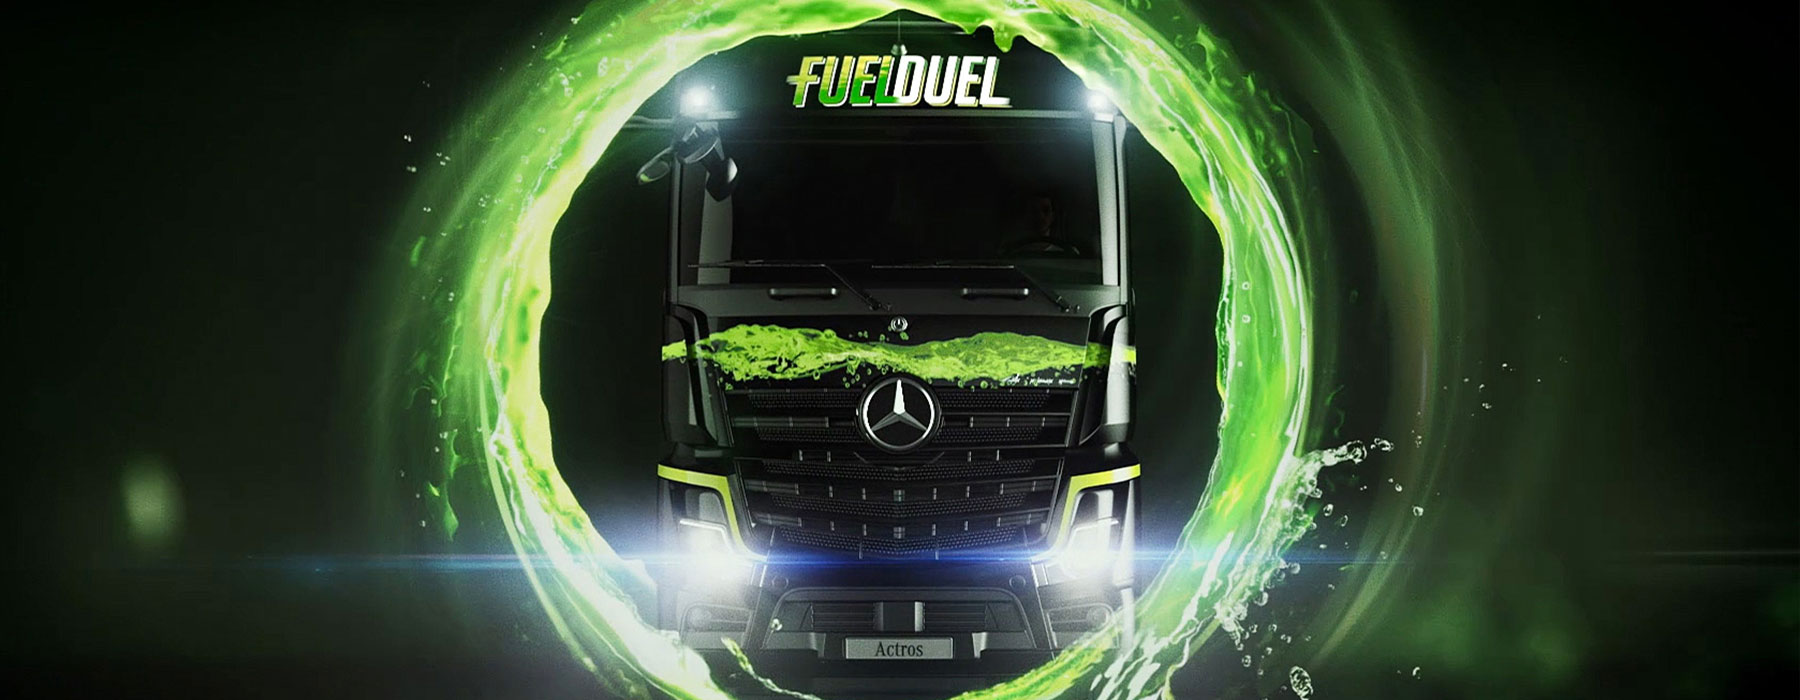 Groep VDH - Fuel Duel header